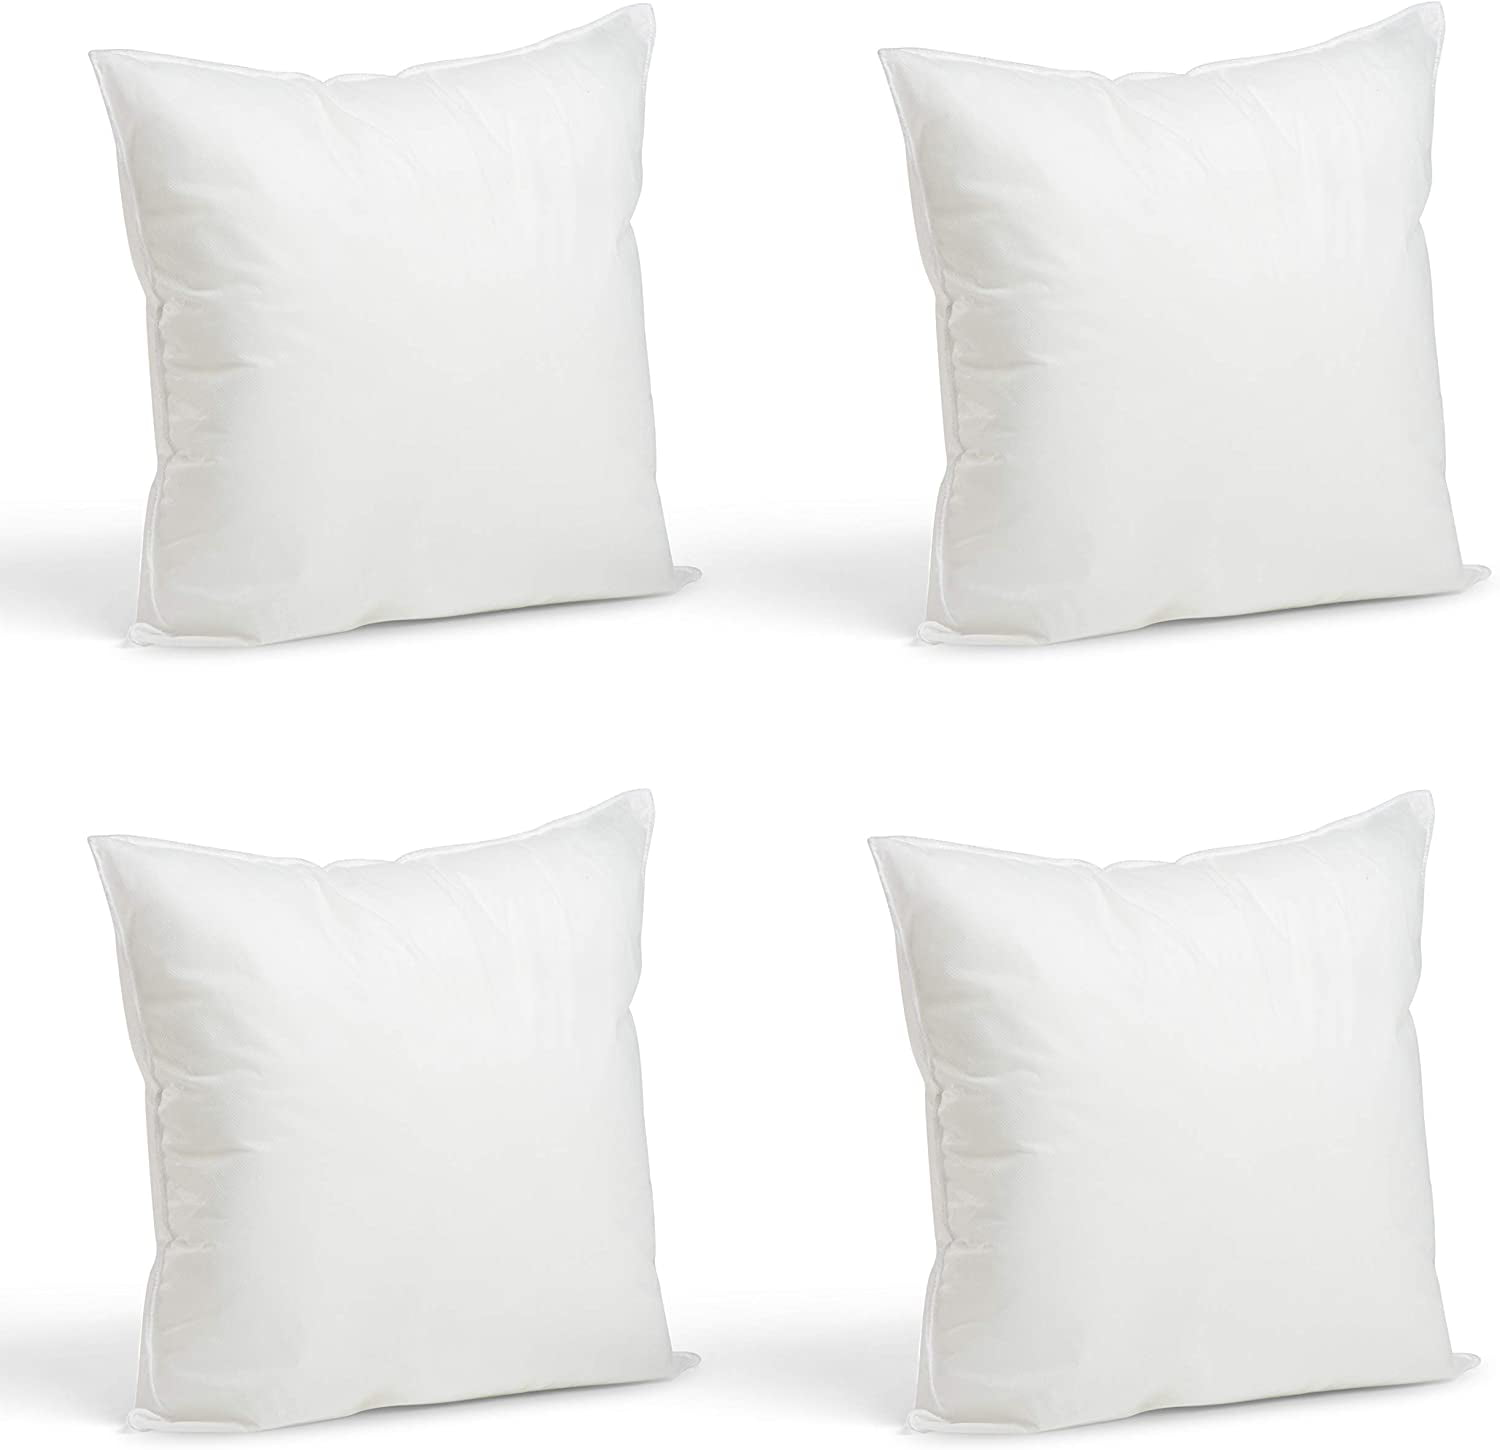 Details about   ALL SIZES Premium Hypoallergenic White Pillow Insert White Lumbar Stuffer Pillow 